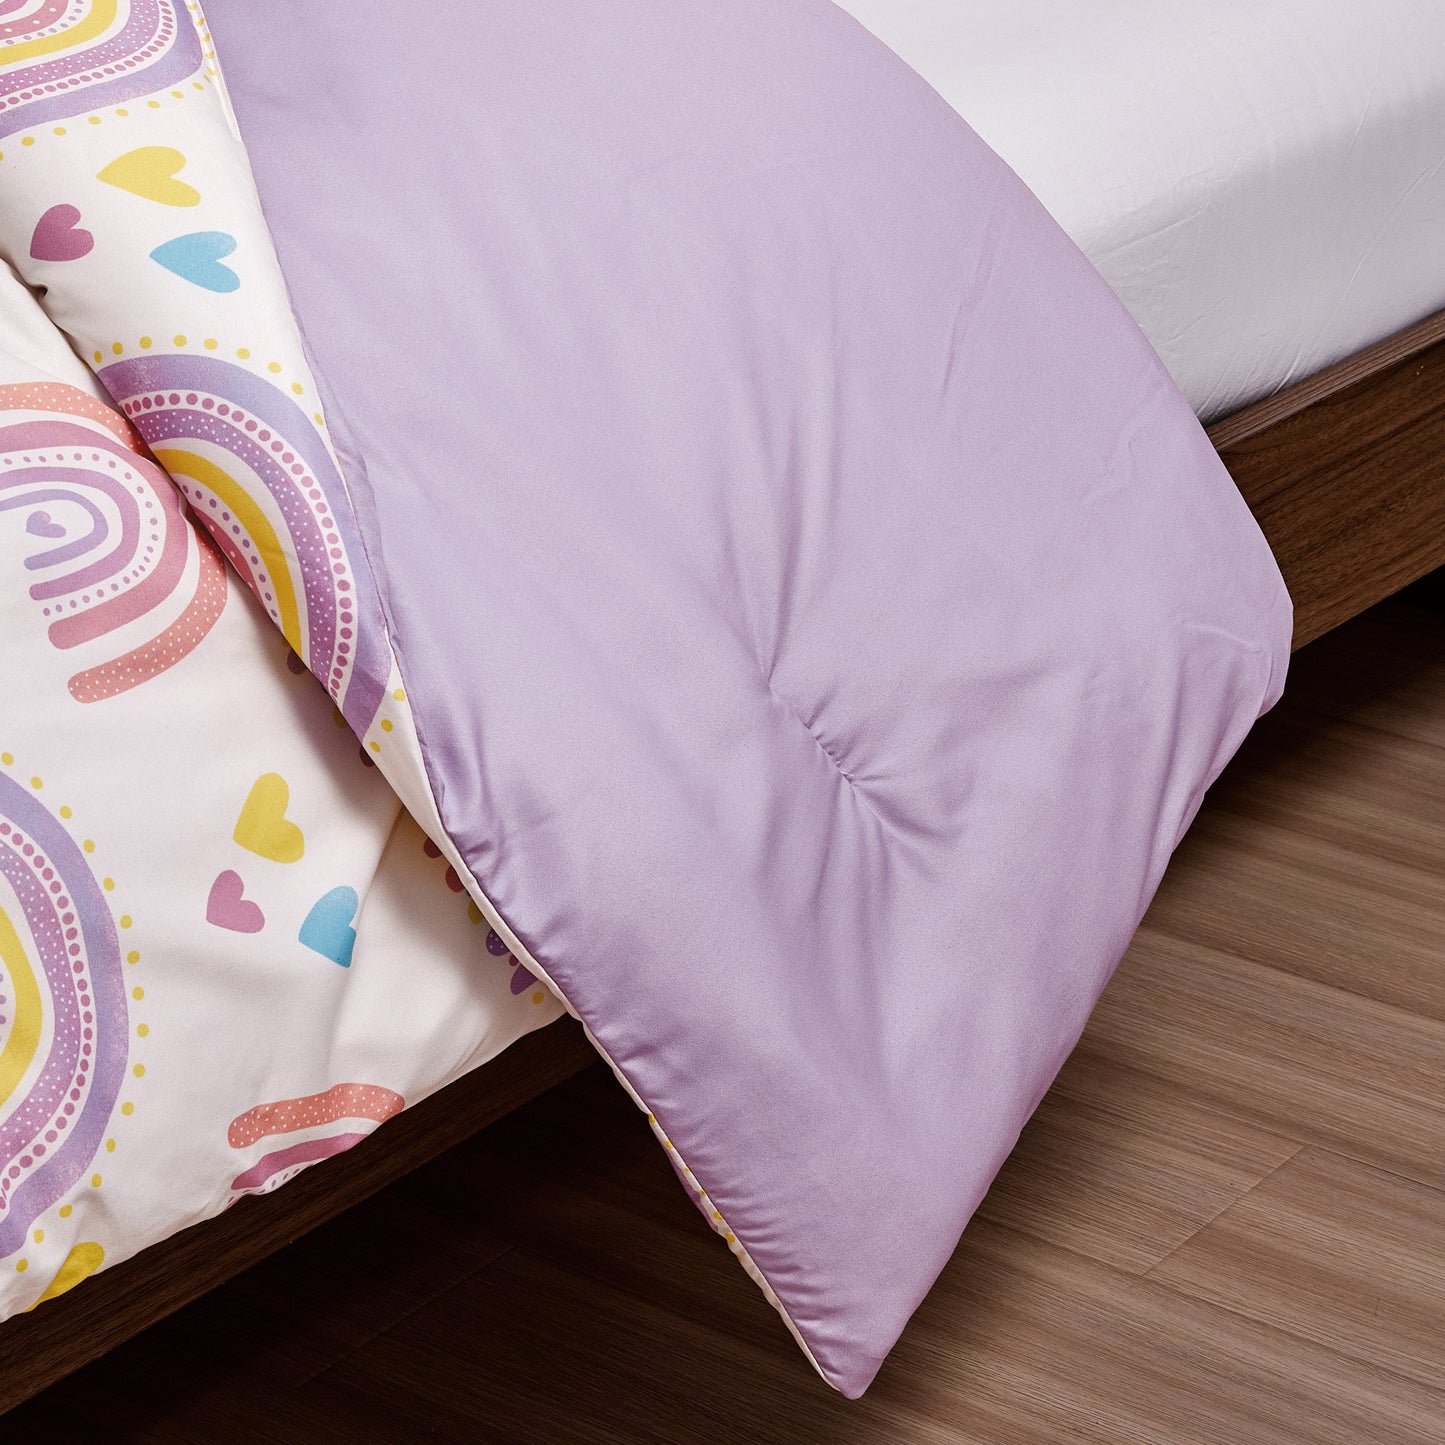 Cute Rainbow Love Hearts Kids Microfiber Printed Comforter Set with Plush Pillow